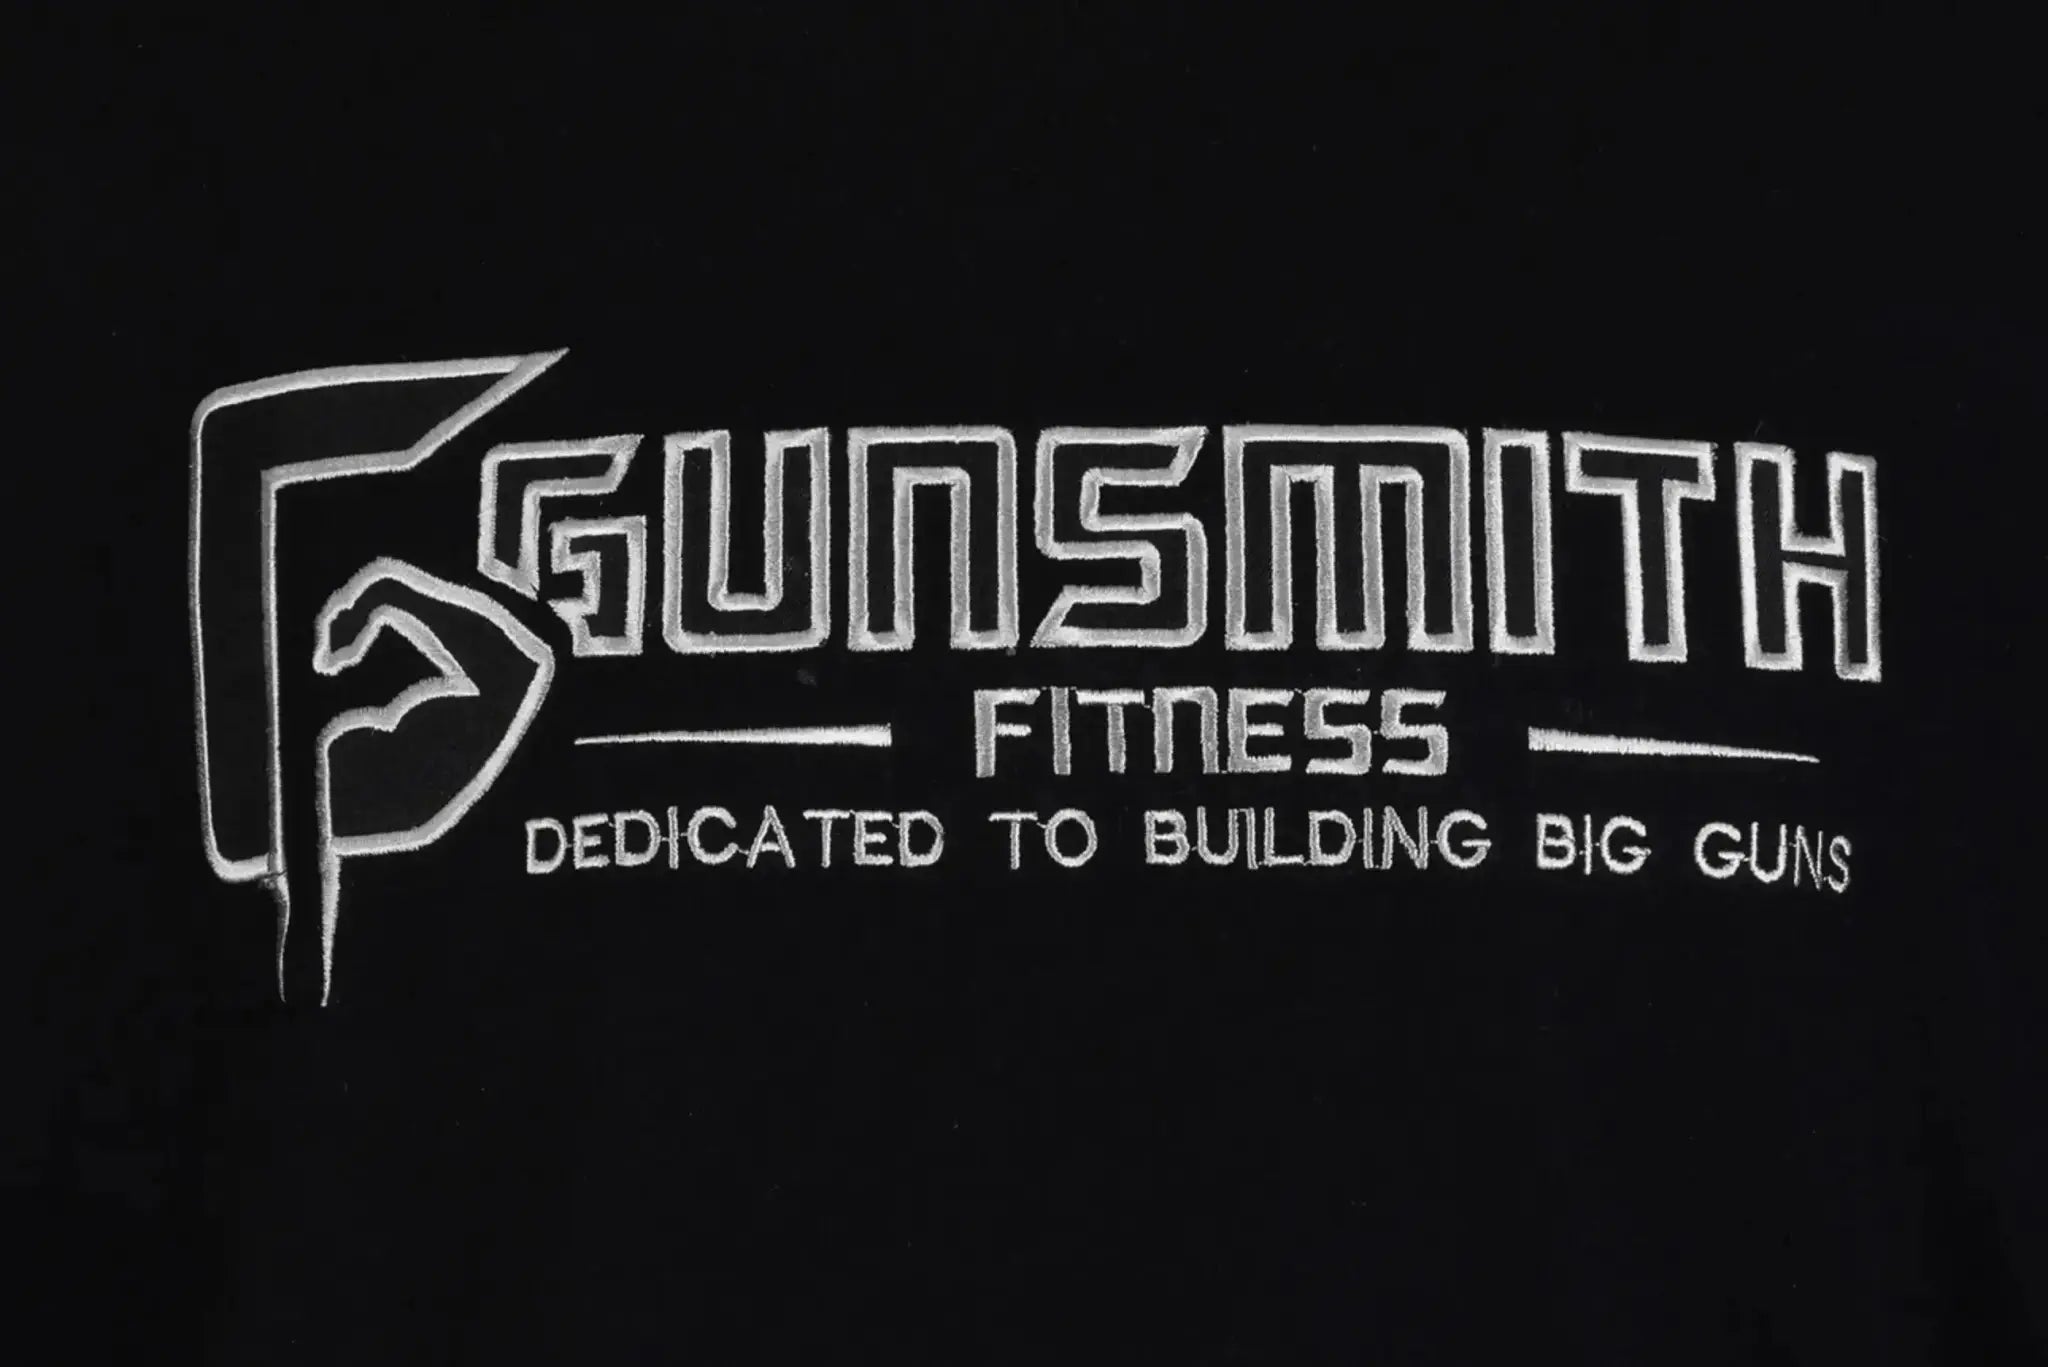 Clearance - Gunsmith Apex Oversized T-Shirt - Gunsmith Fitness